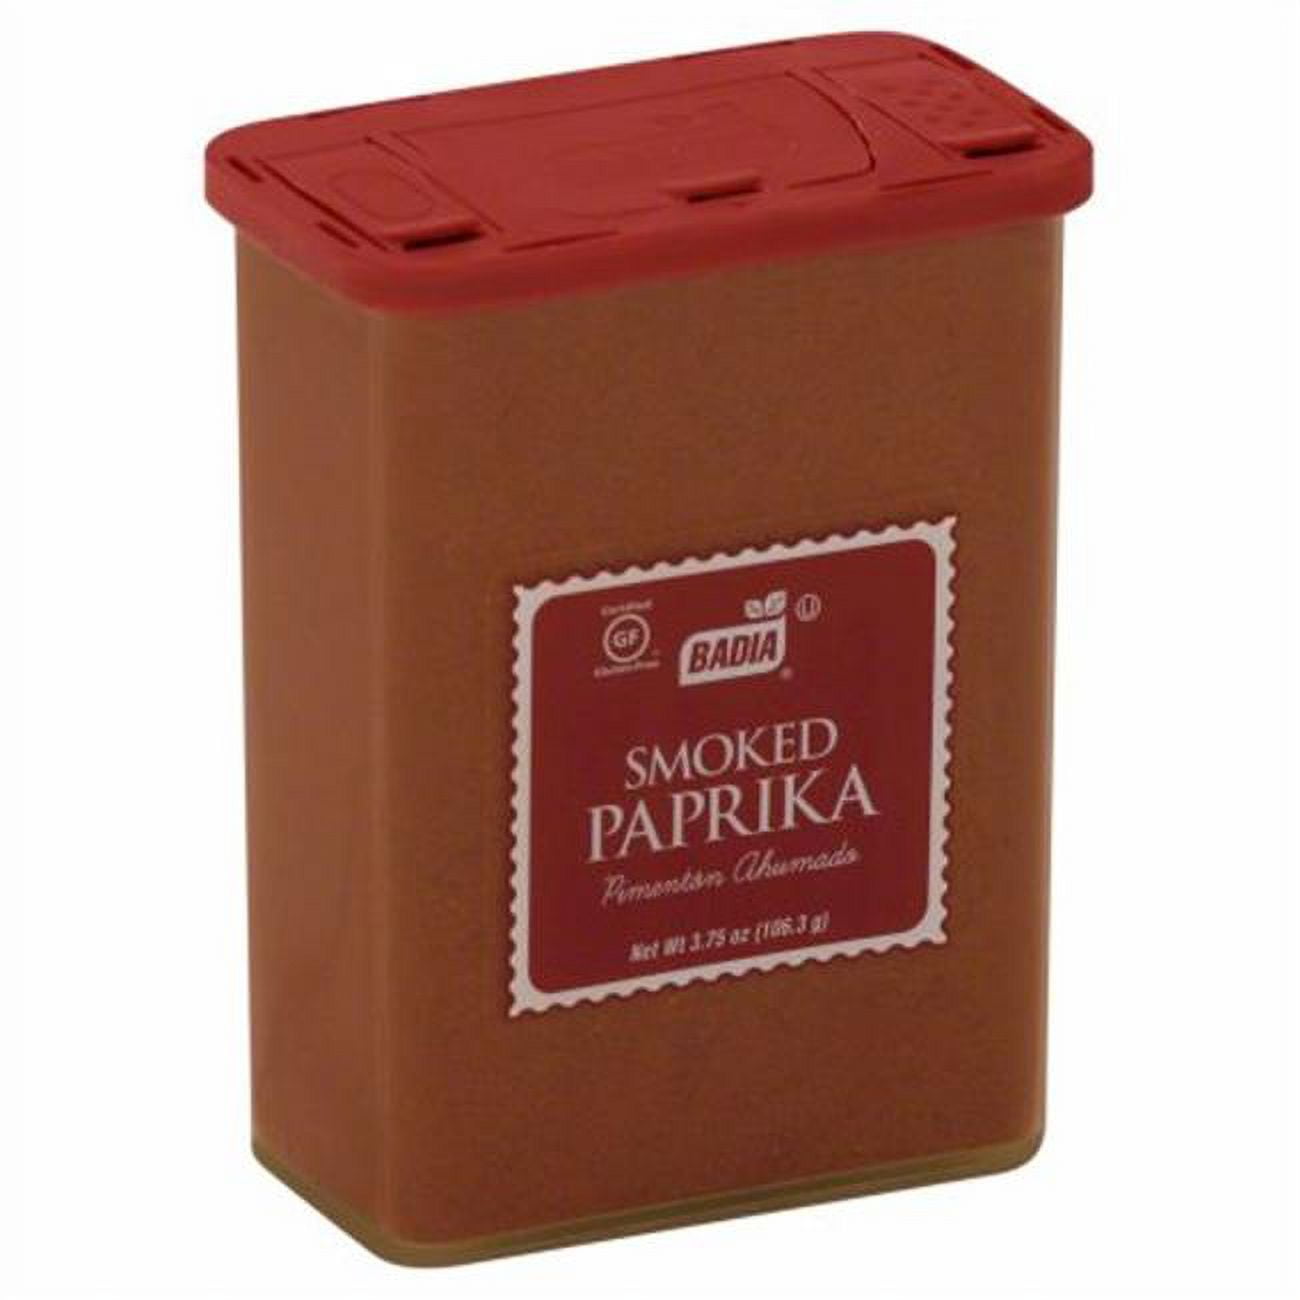 Badia Gluten Free Smoked Paprika 3.75 oz Box